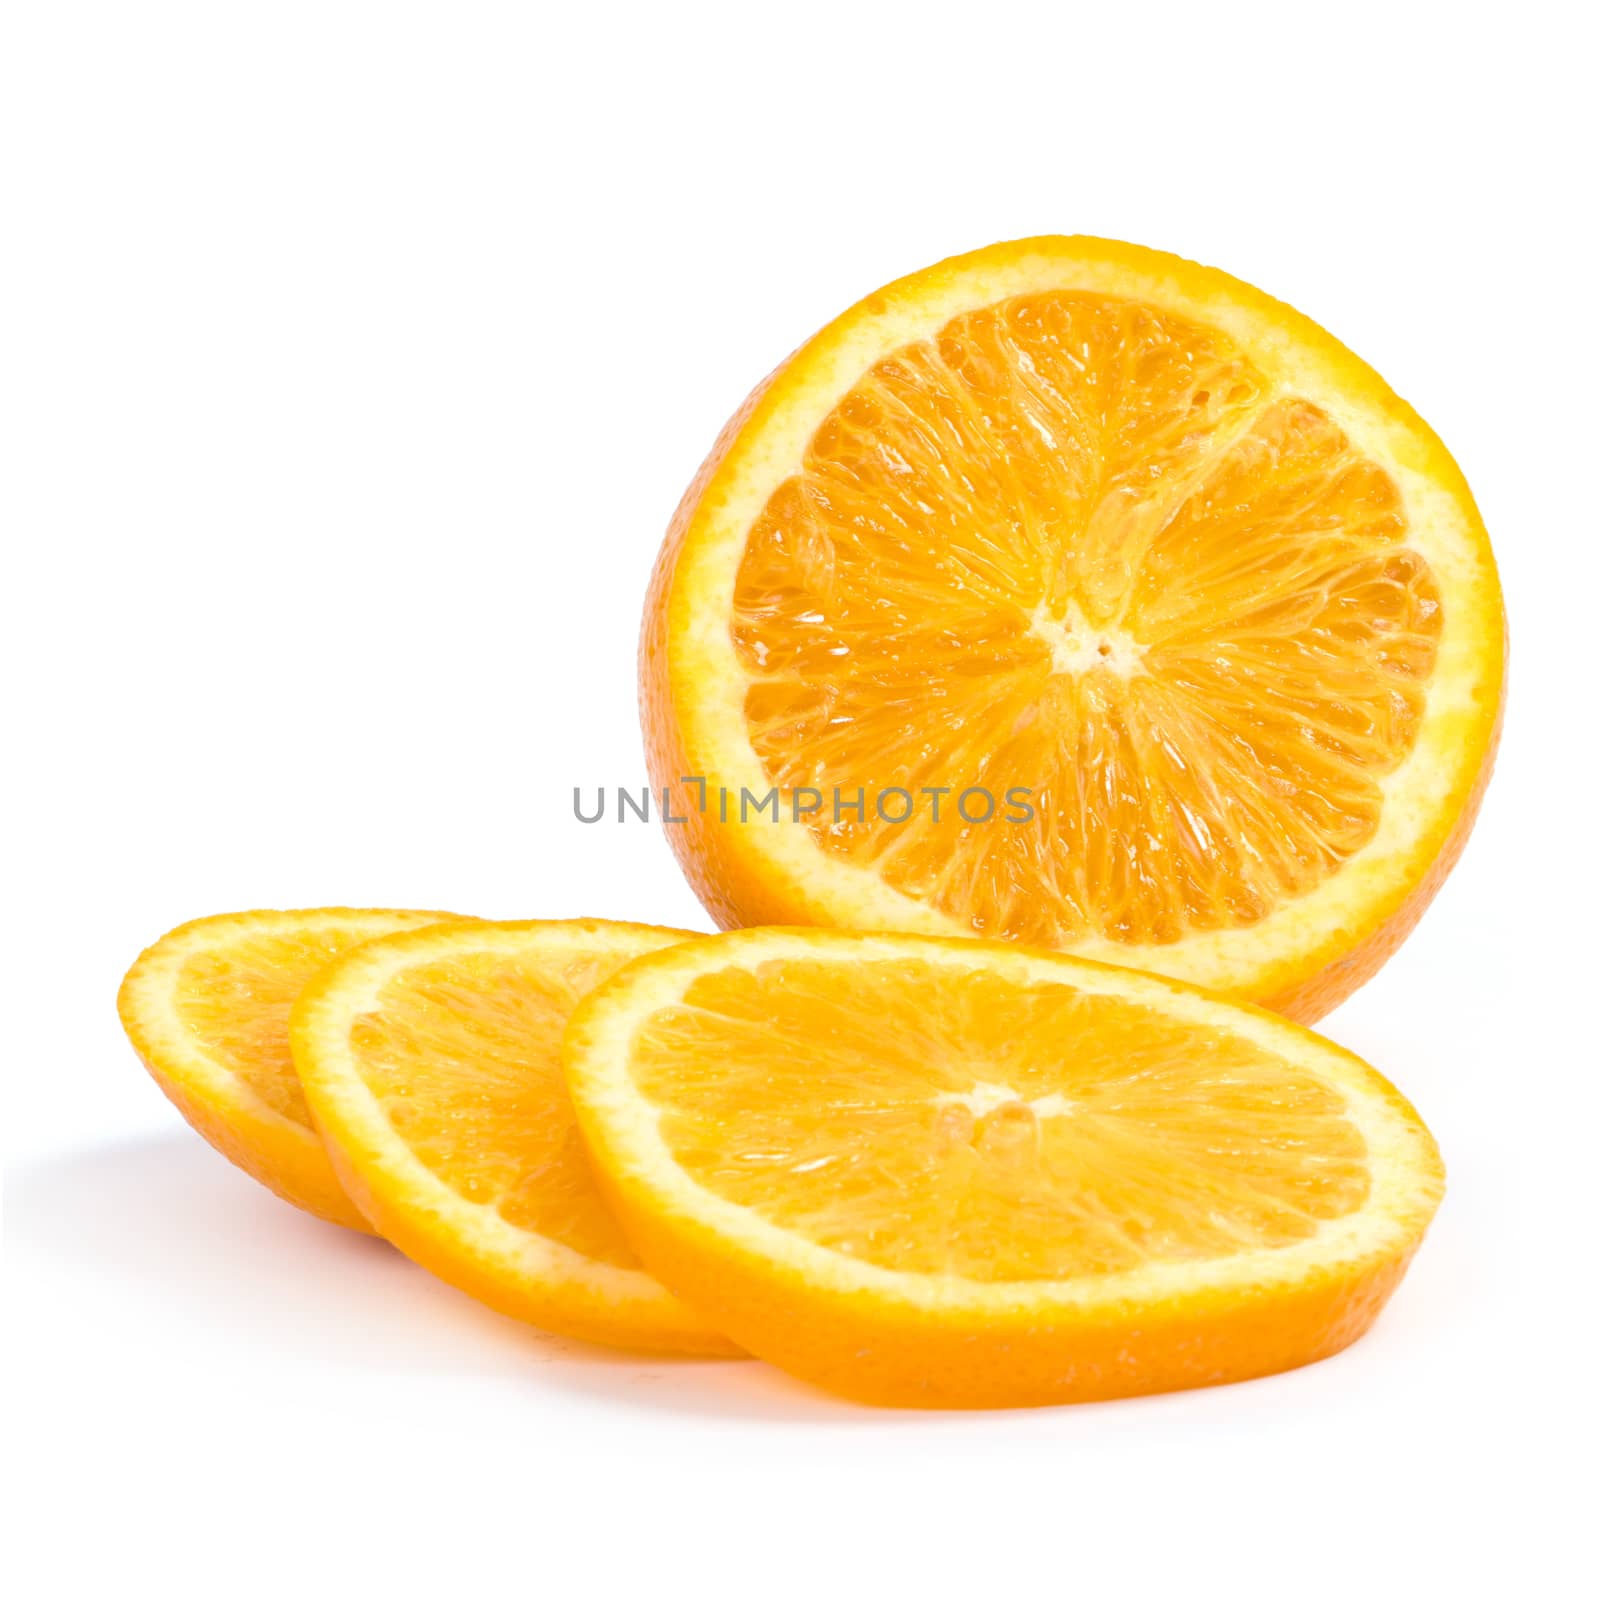 Citrus. Delicious orange on a white background